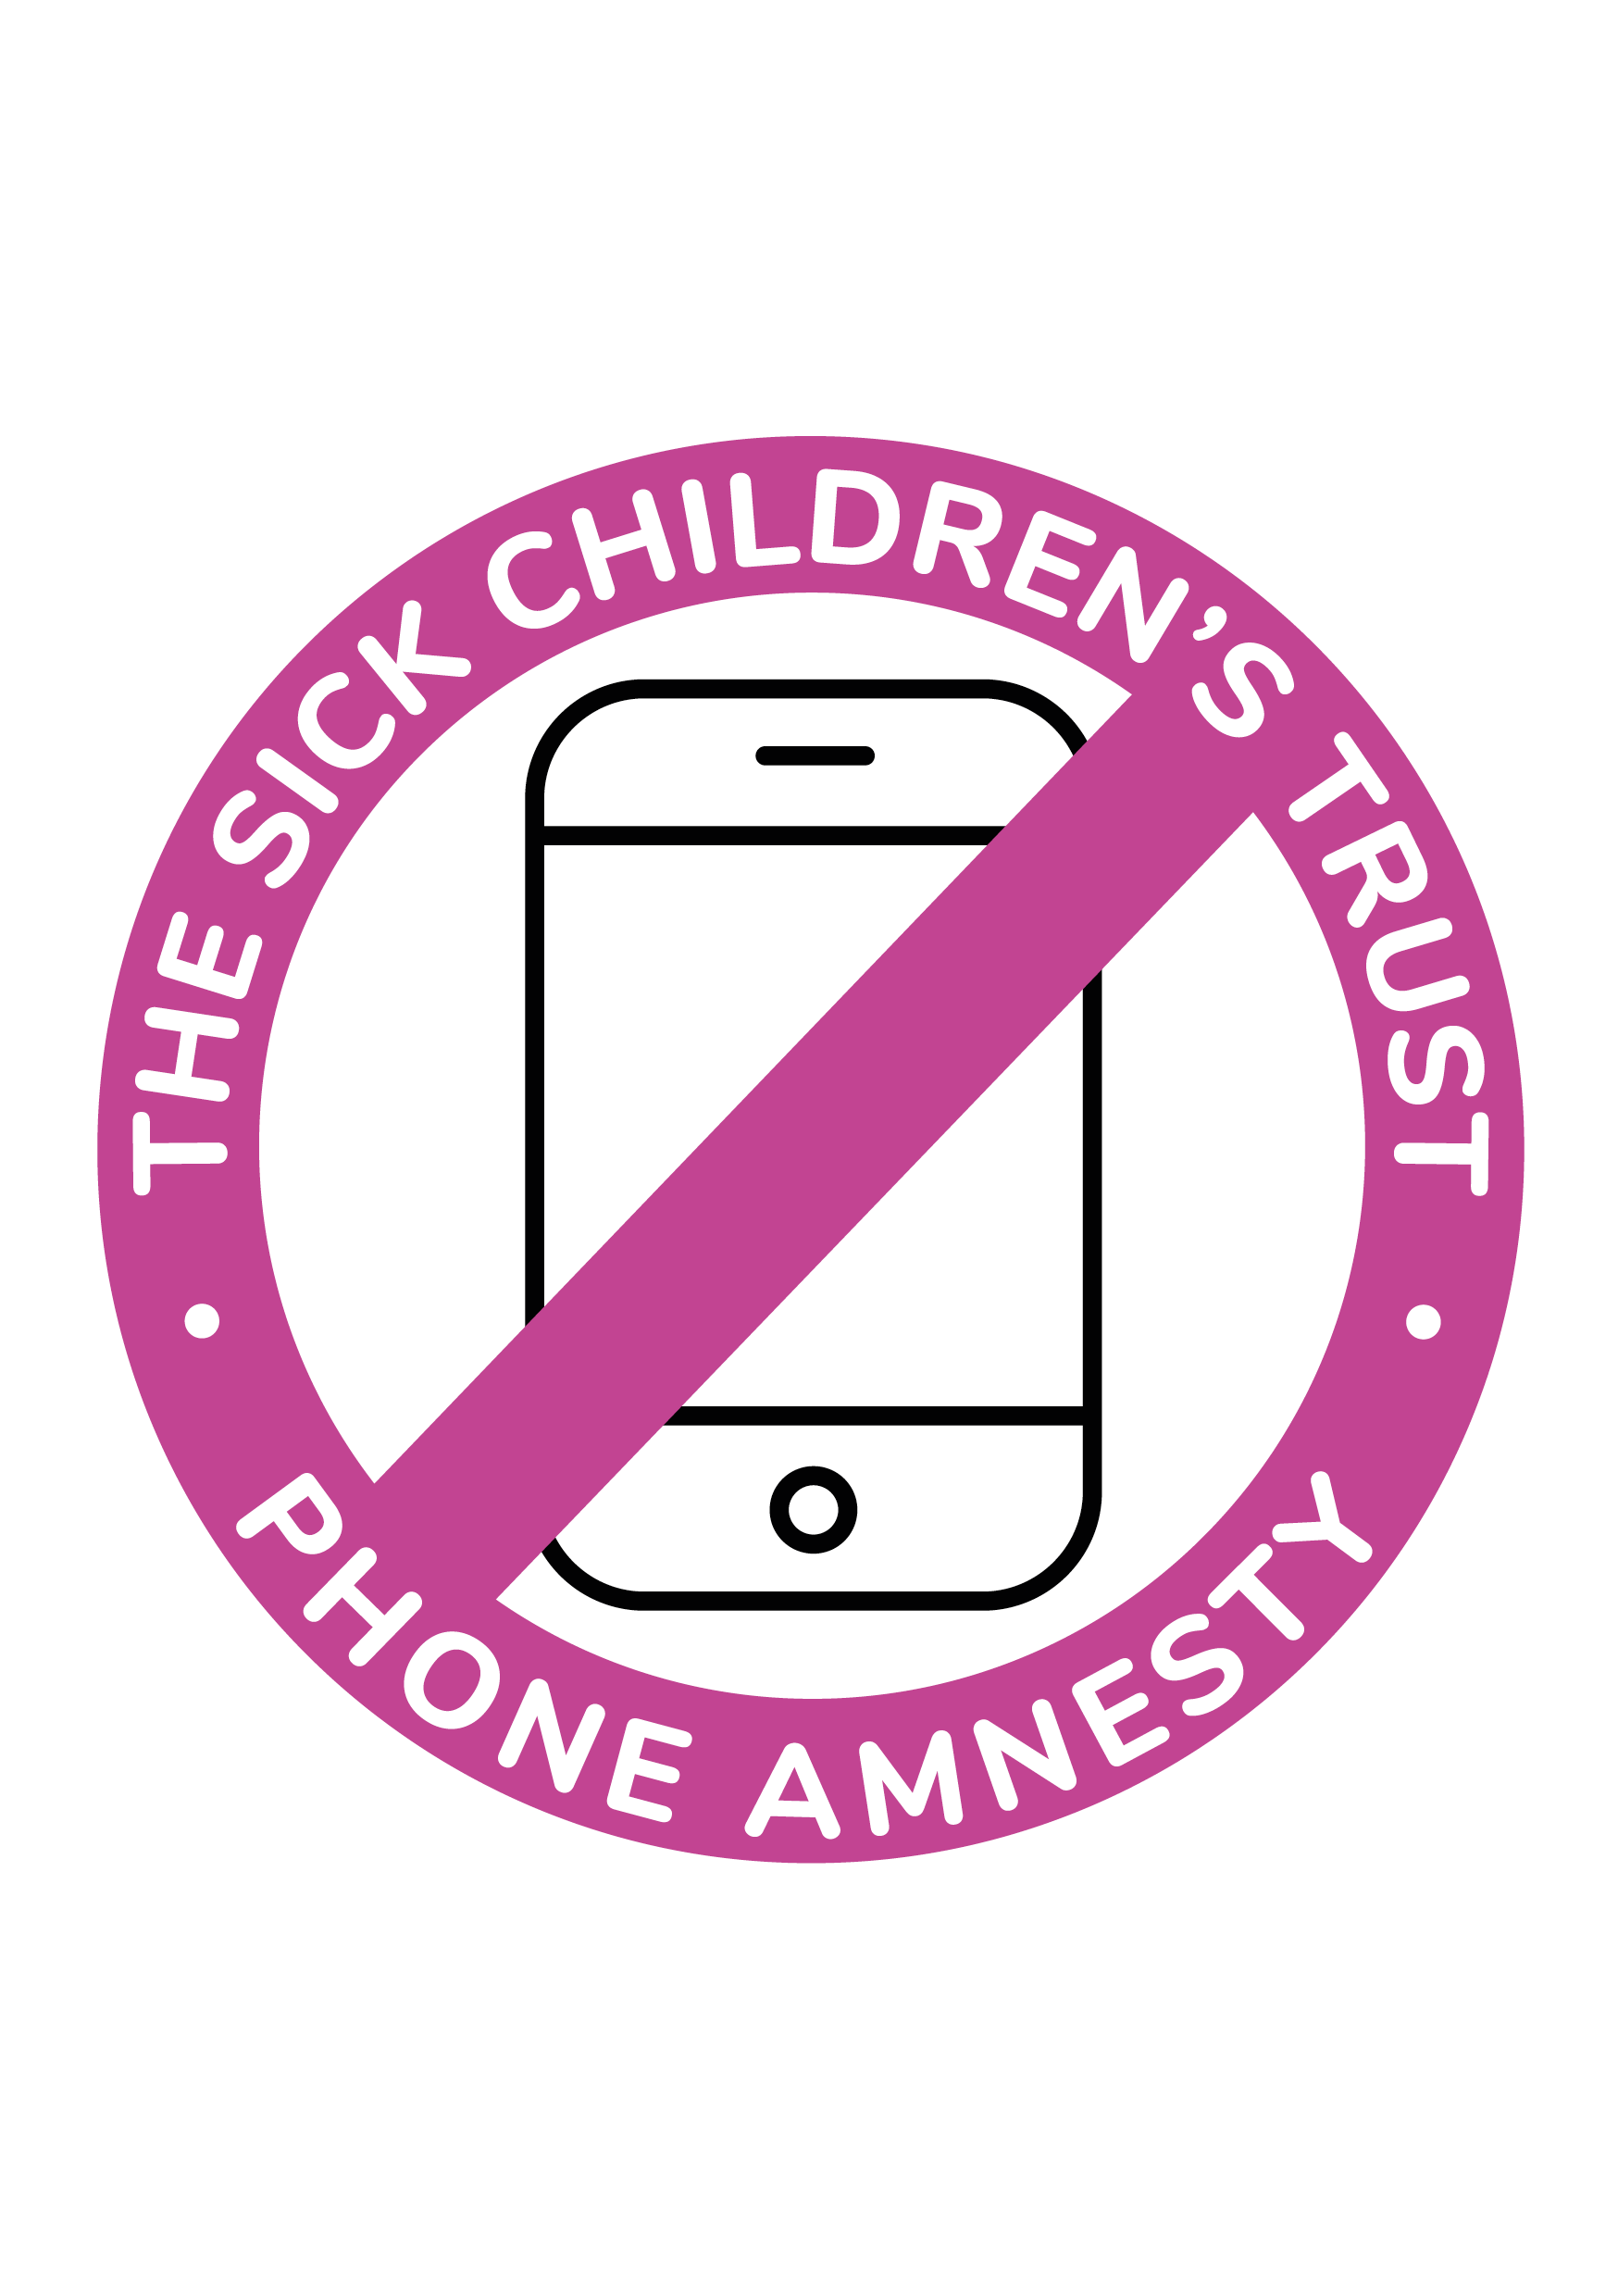 Phone Amnesty